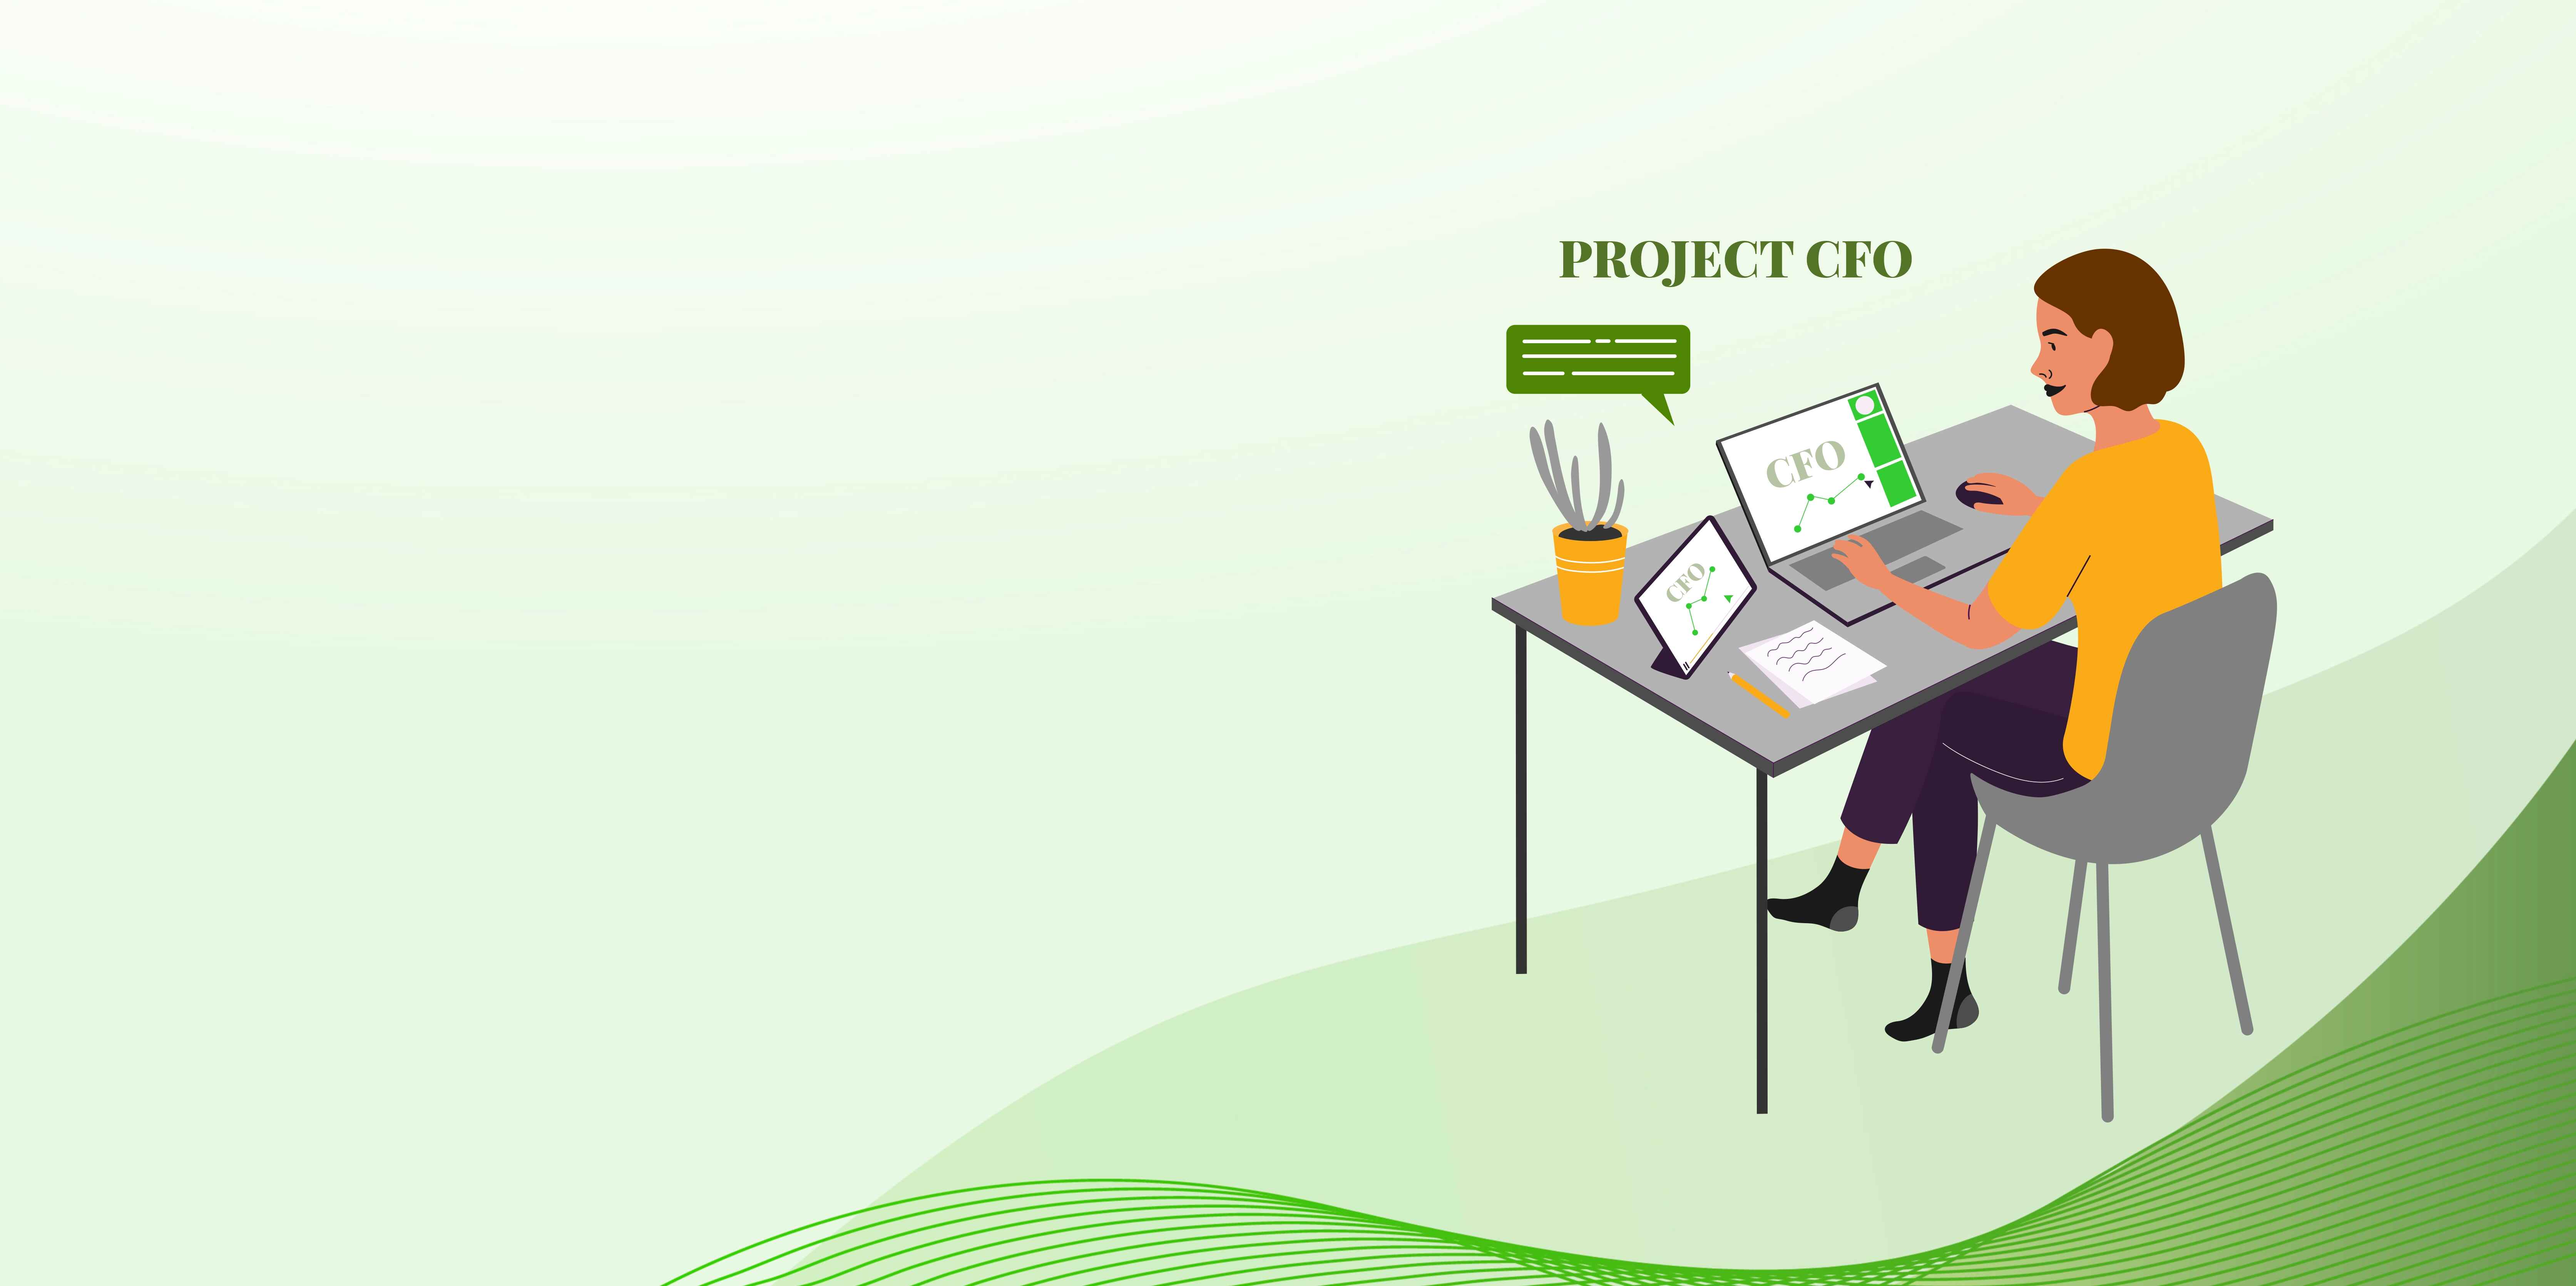 Project CFO